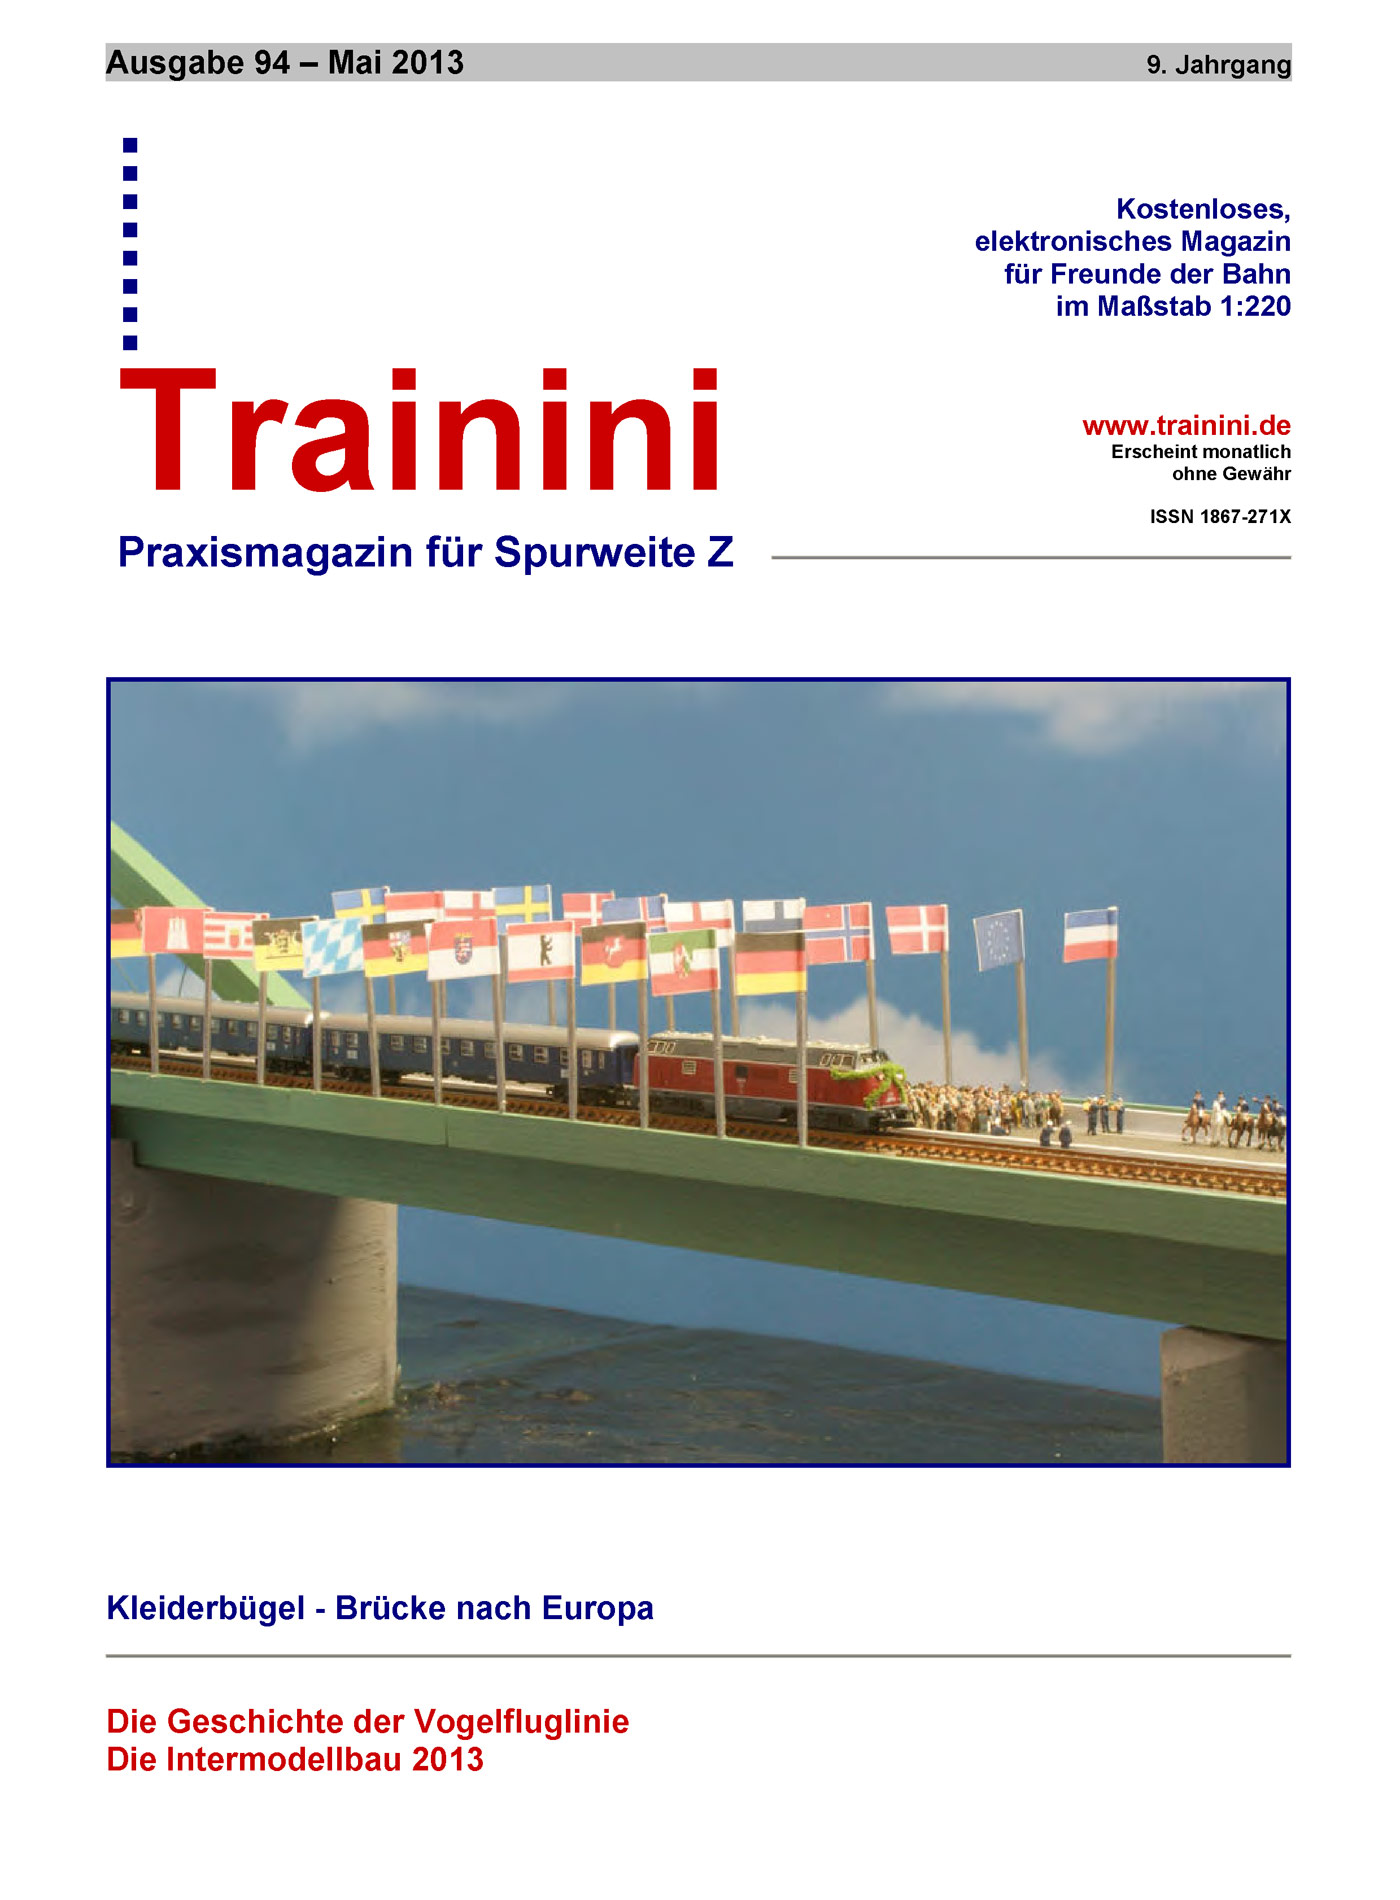 Trainini Ausgabe Mai 2013